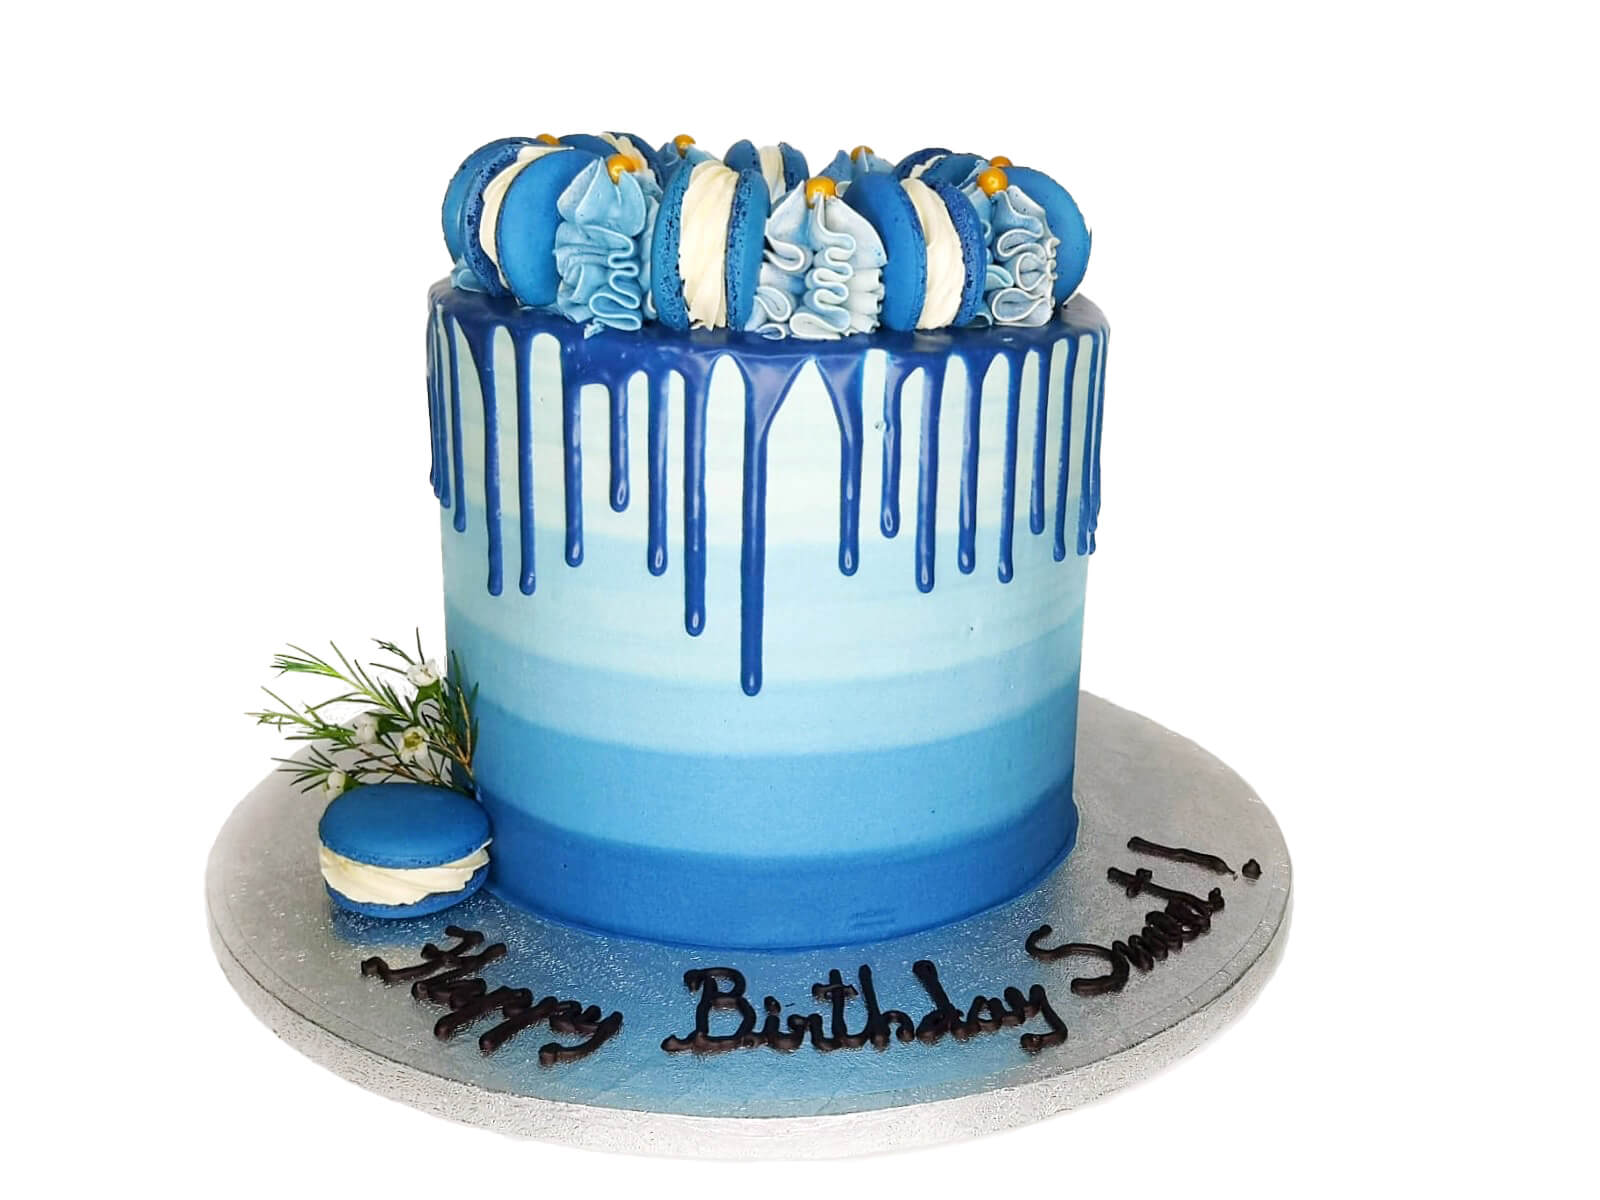 wedding cake with blue and white flowers - Decorated Cake - CakesDecor